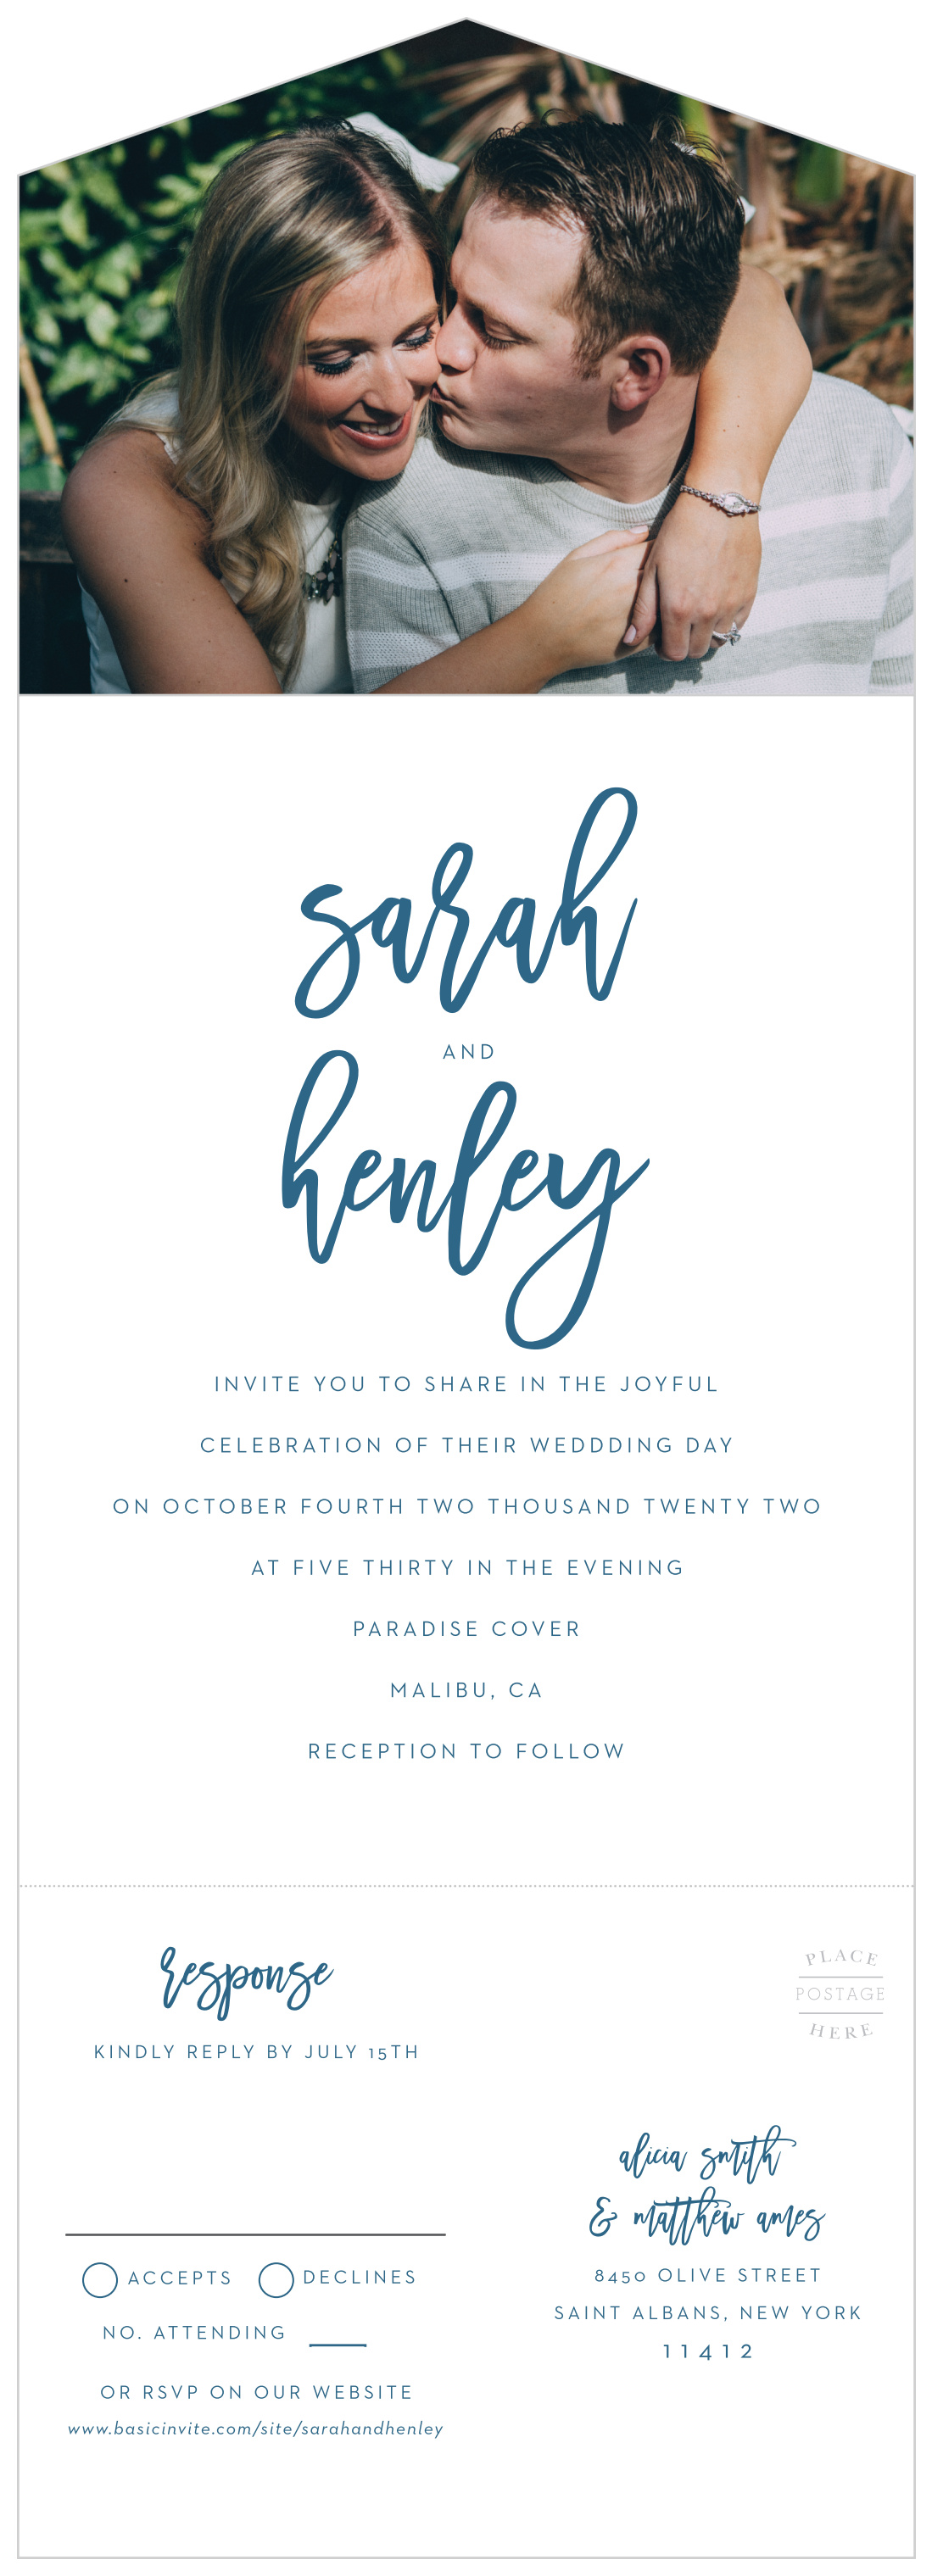 Simply Typographic Seal & Send Wedding Invitations